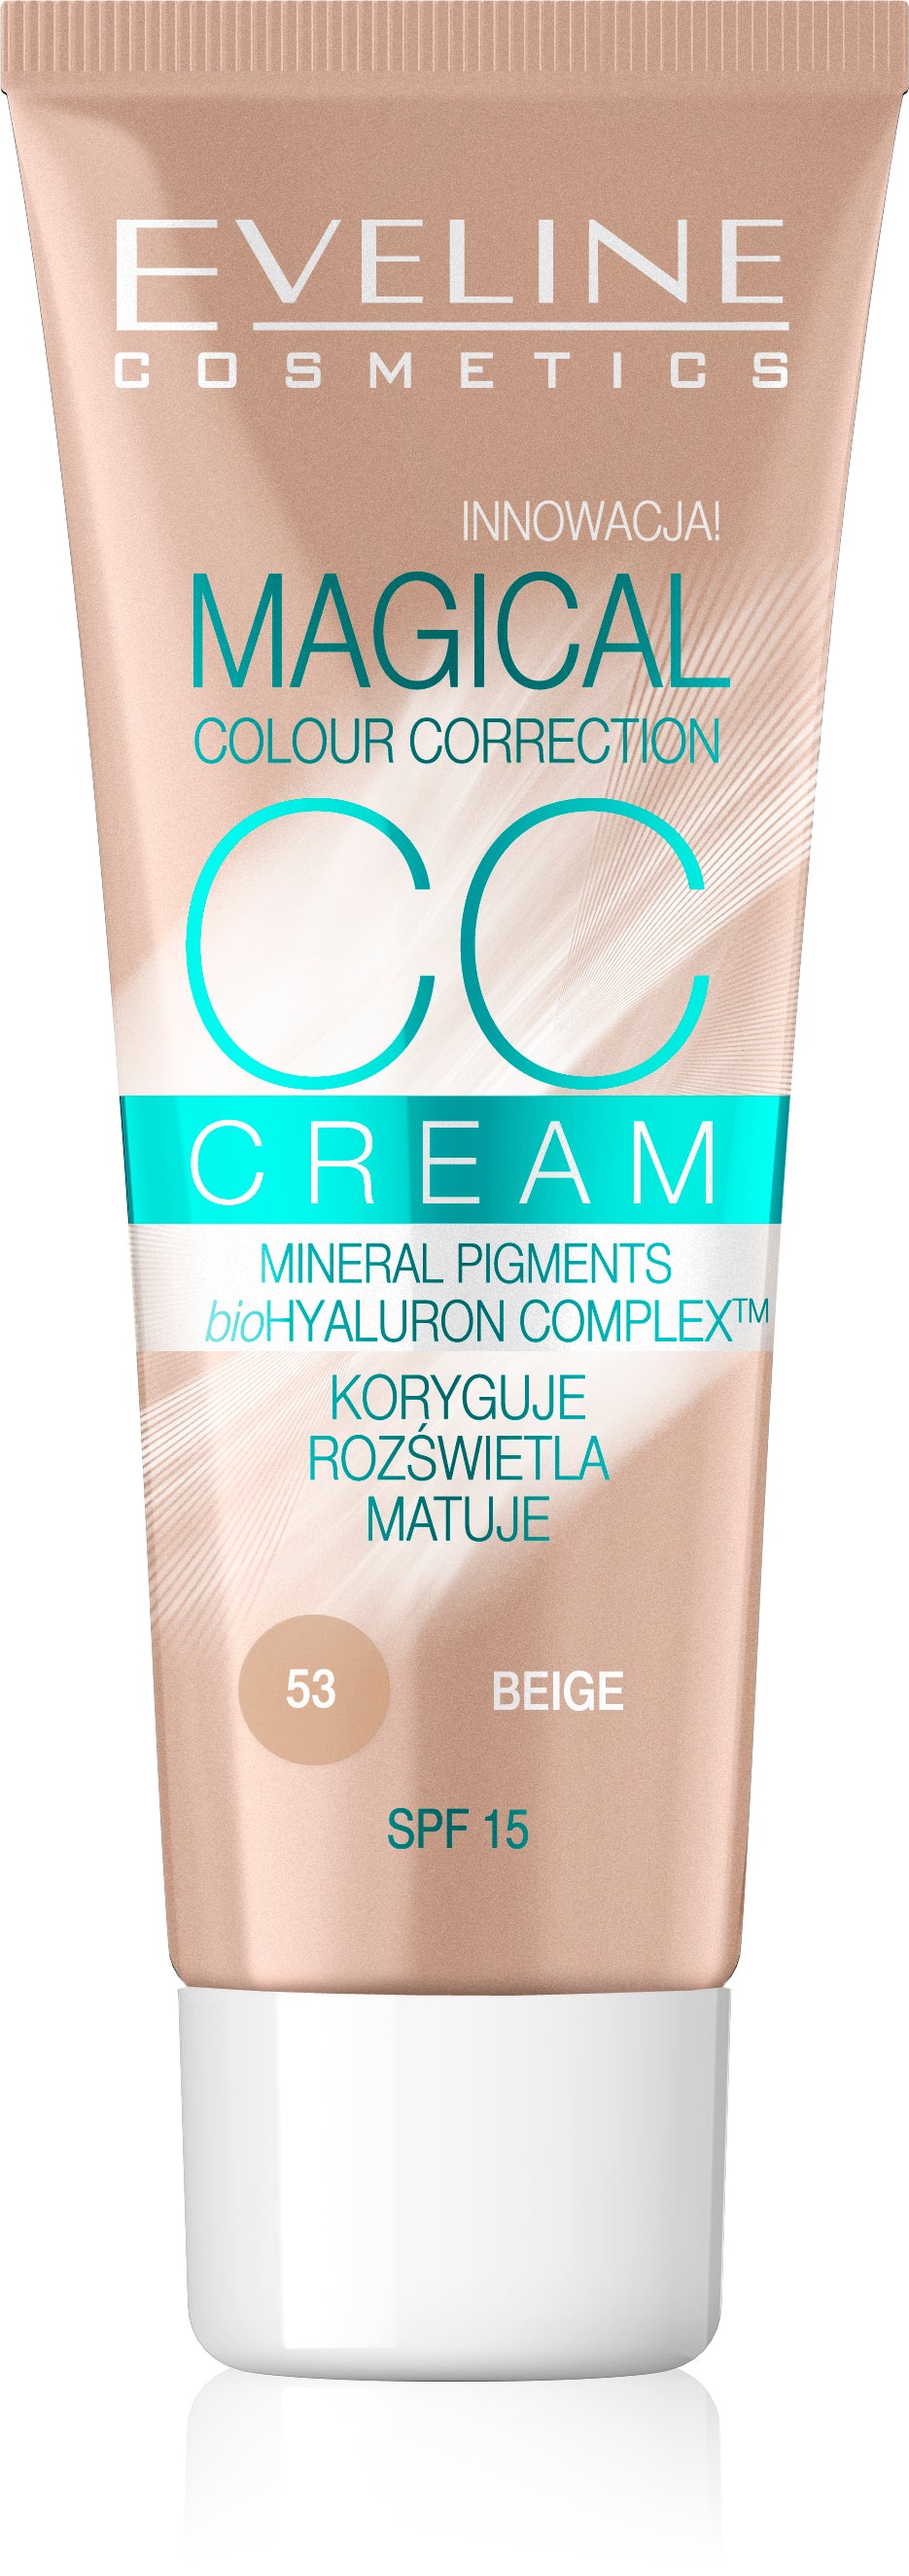 CC Cream Magical Colour Correction  Beige 30ML